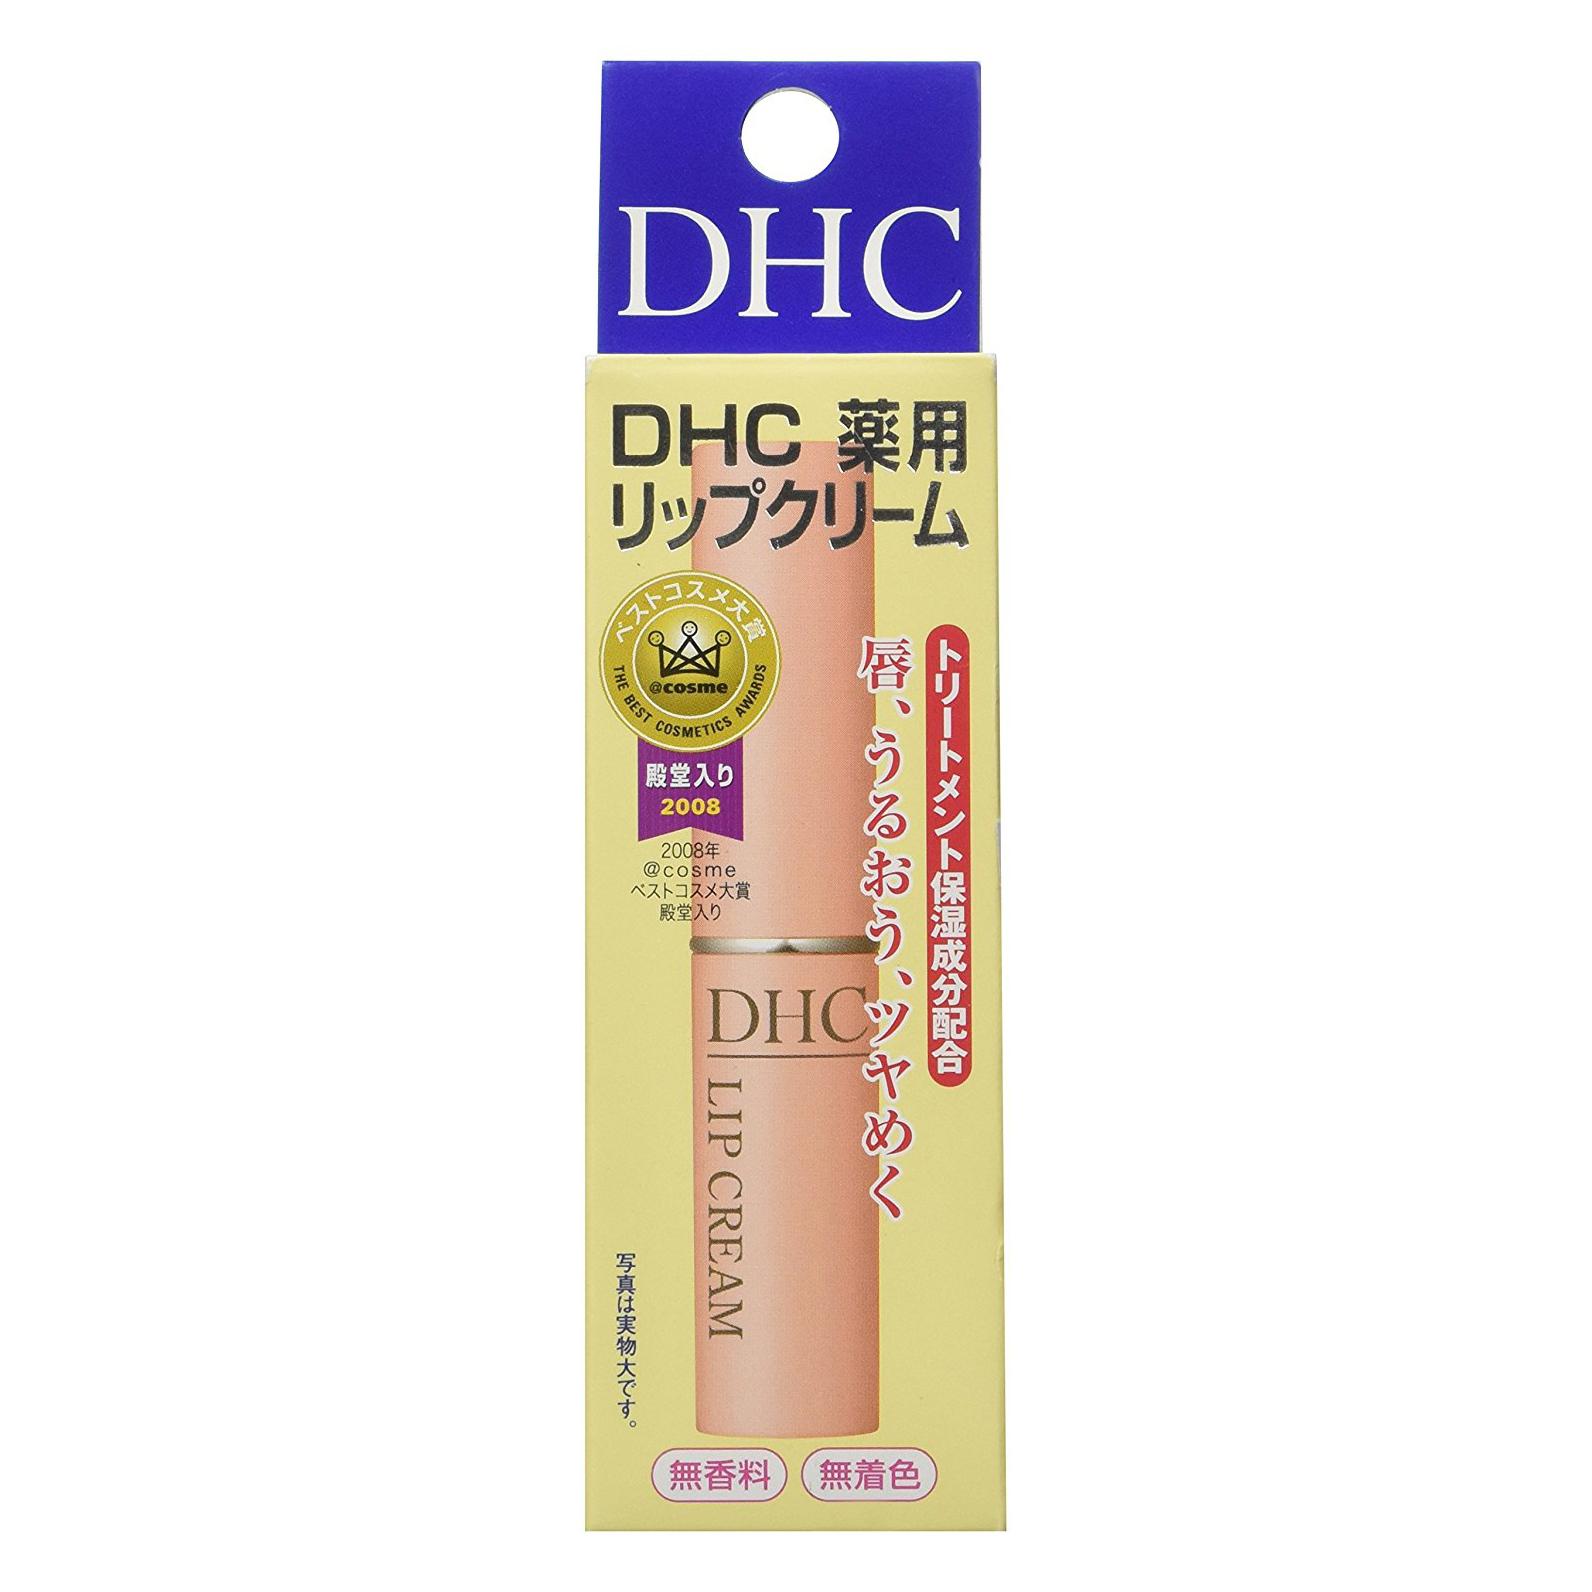 DHC 蝶翠诗 药用唇膏 1.5g